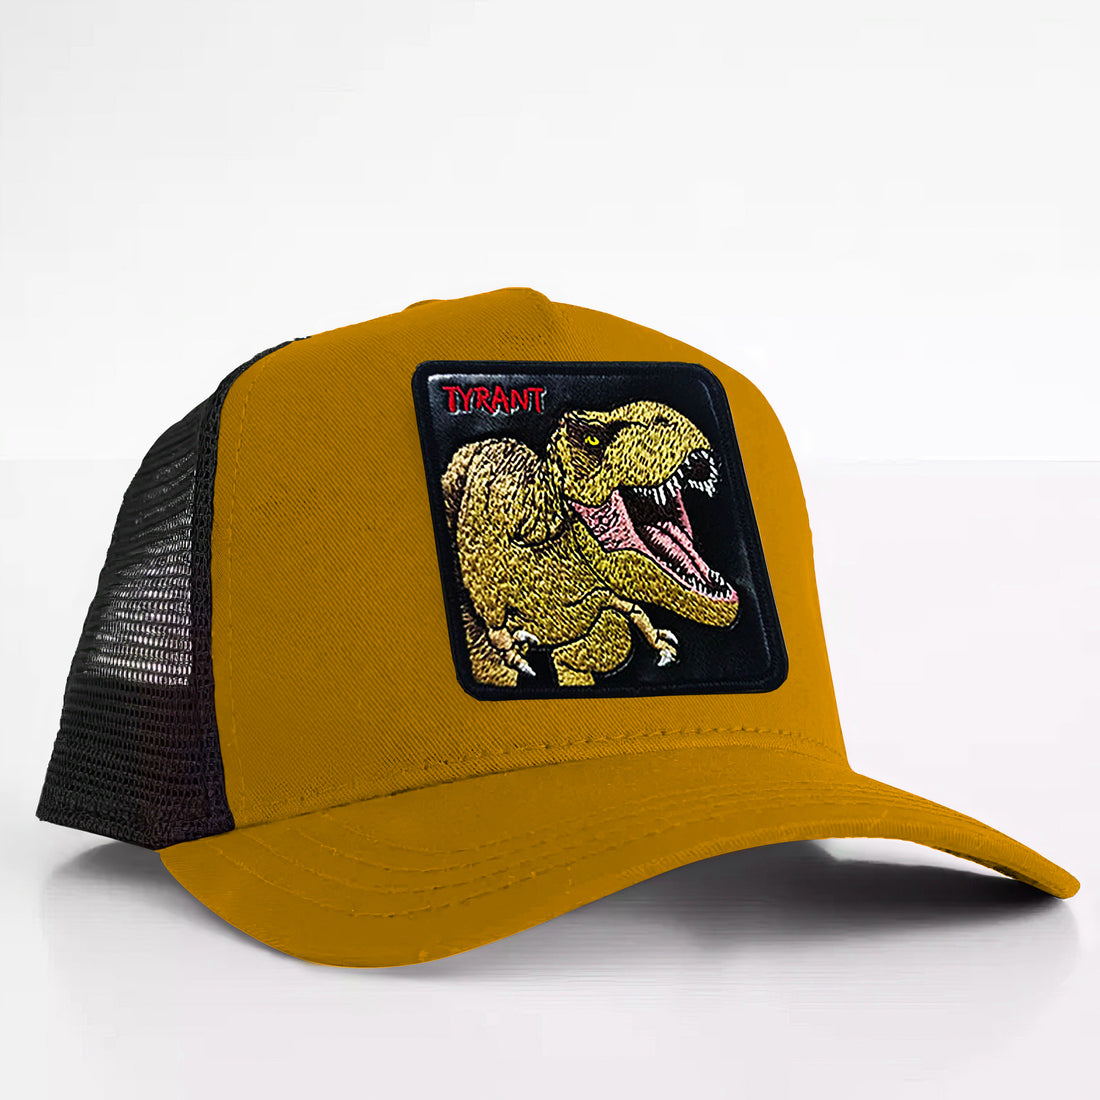 T-Rex "Tyrant" Trucker Hat